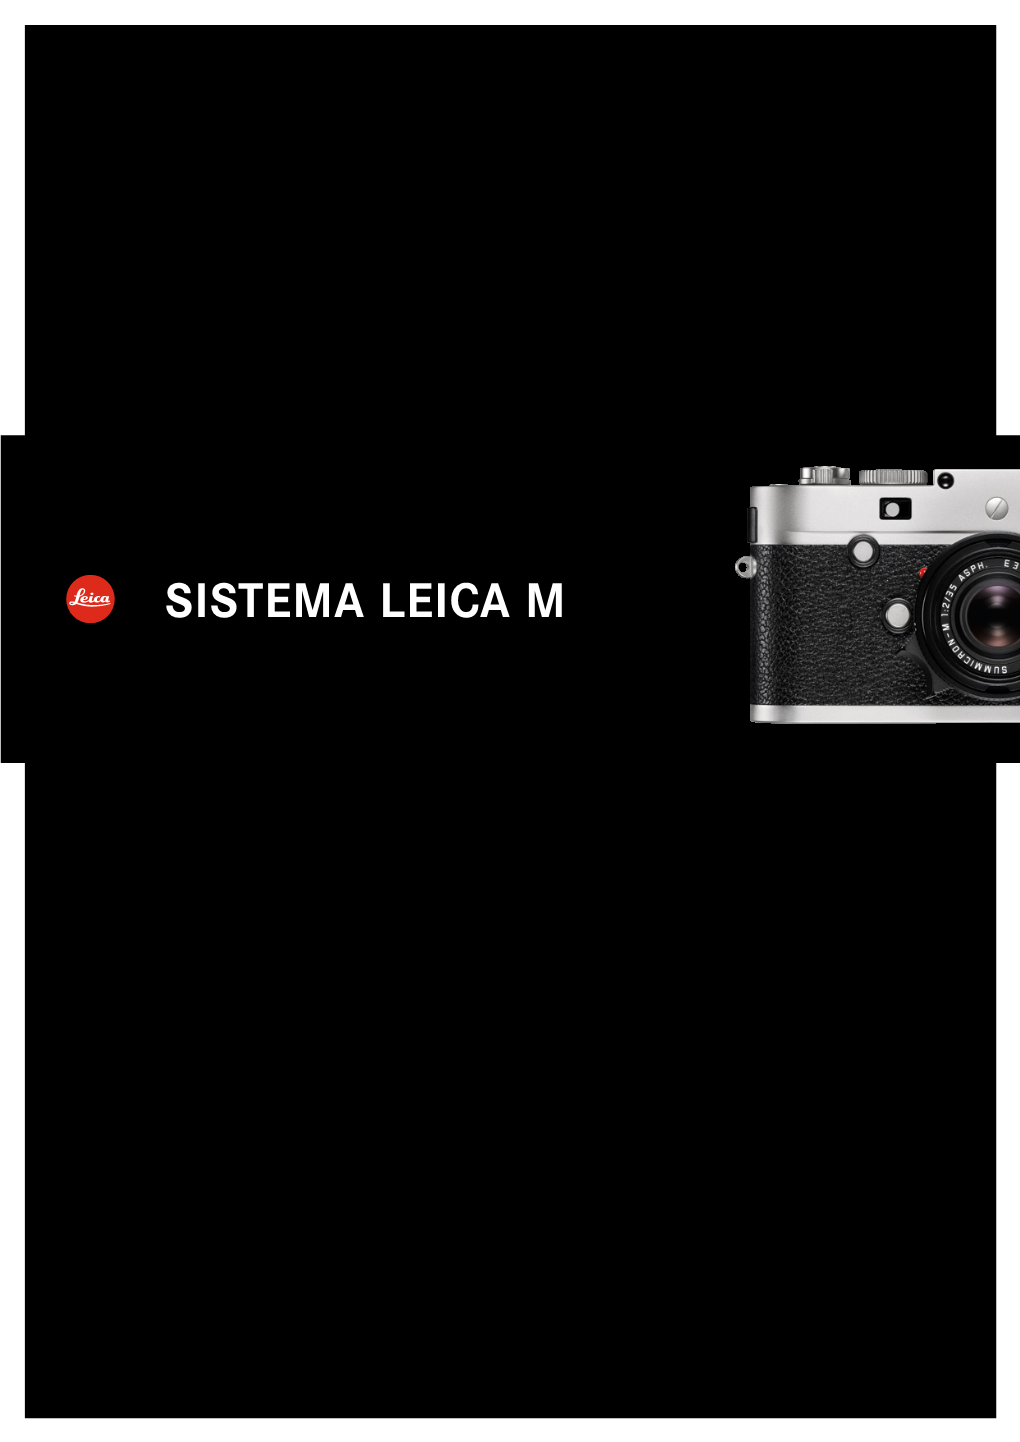 Sistema Leica M 100 Anni Di Fotografia Leica 04 Leica Analogica 38